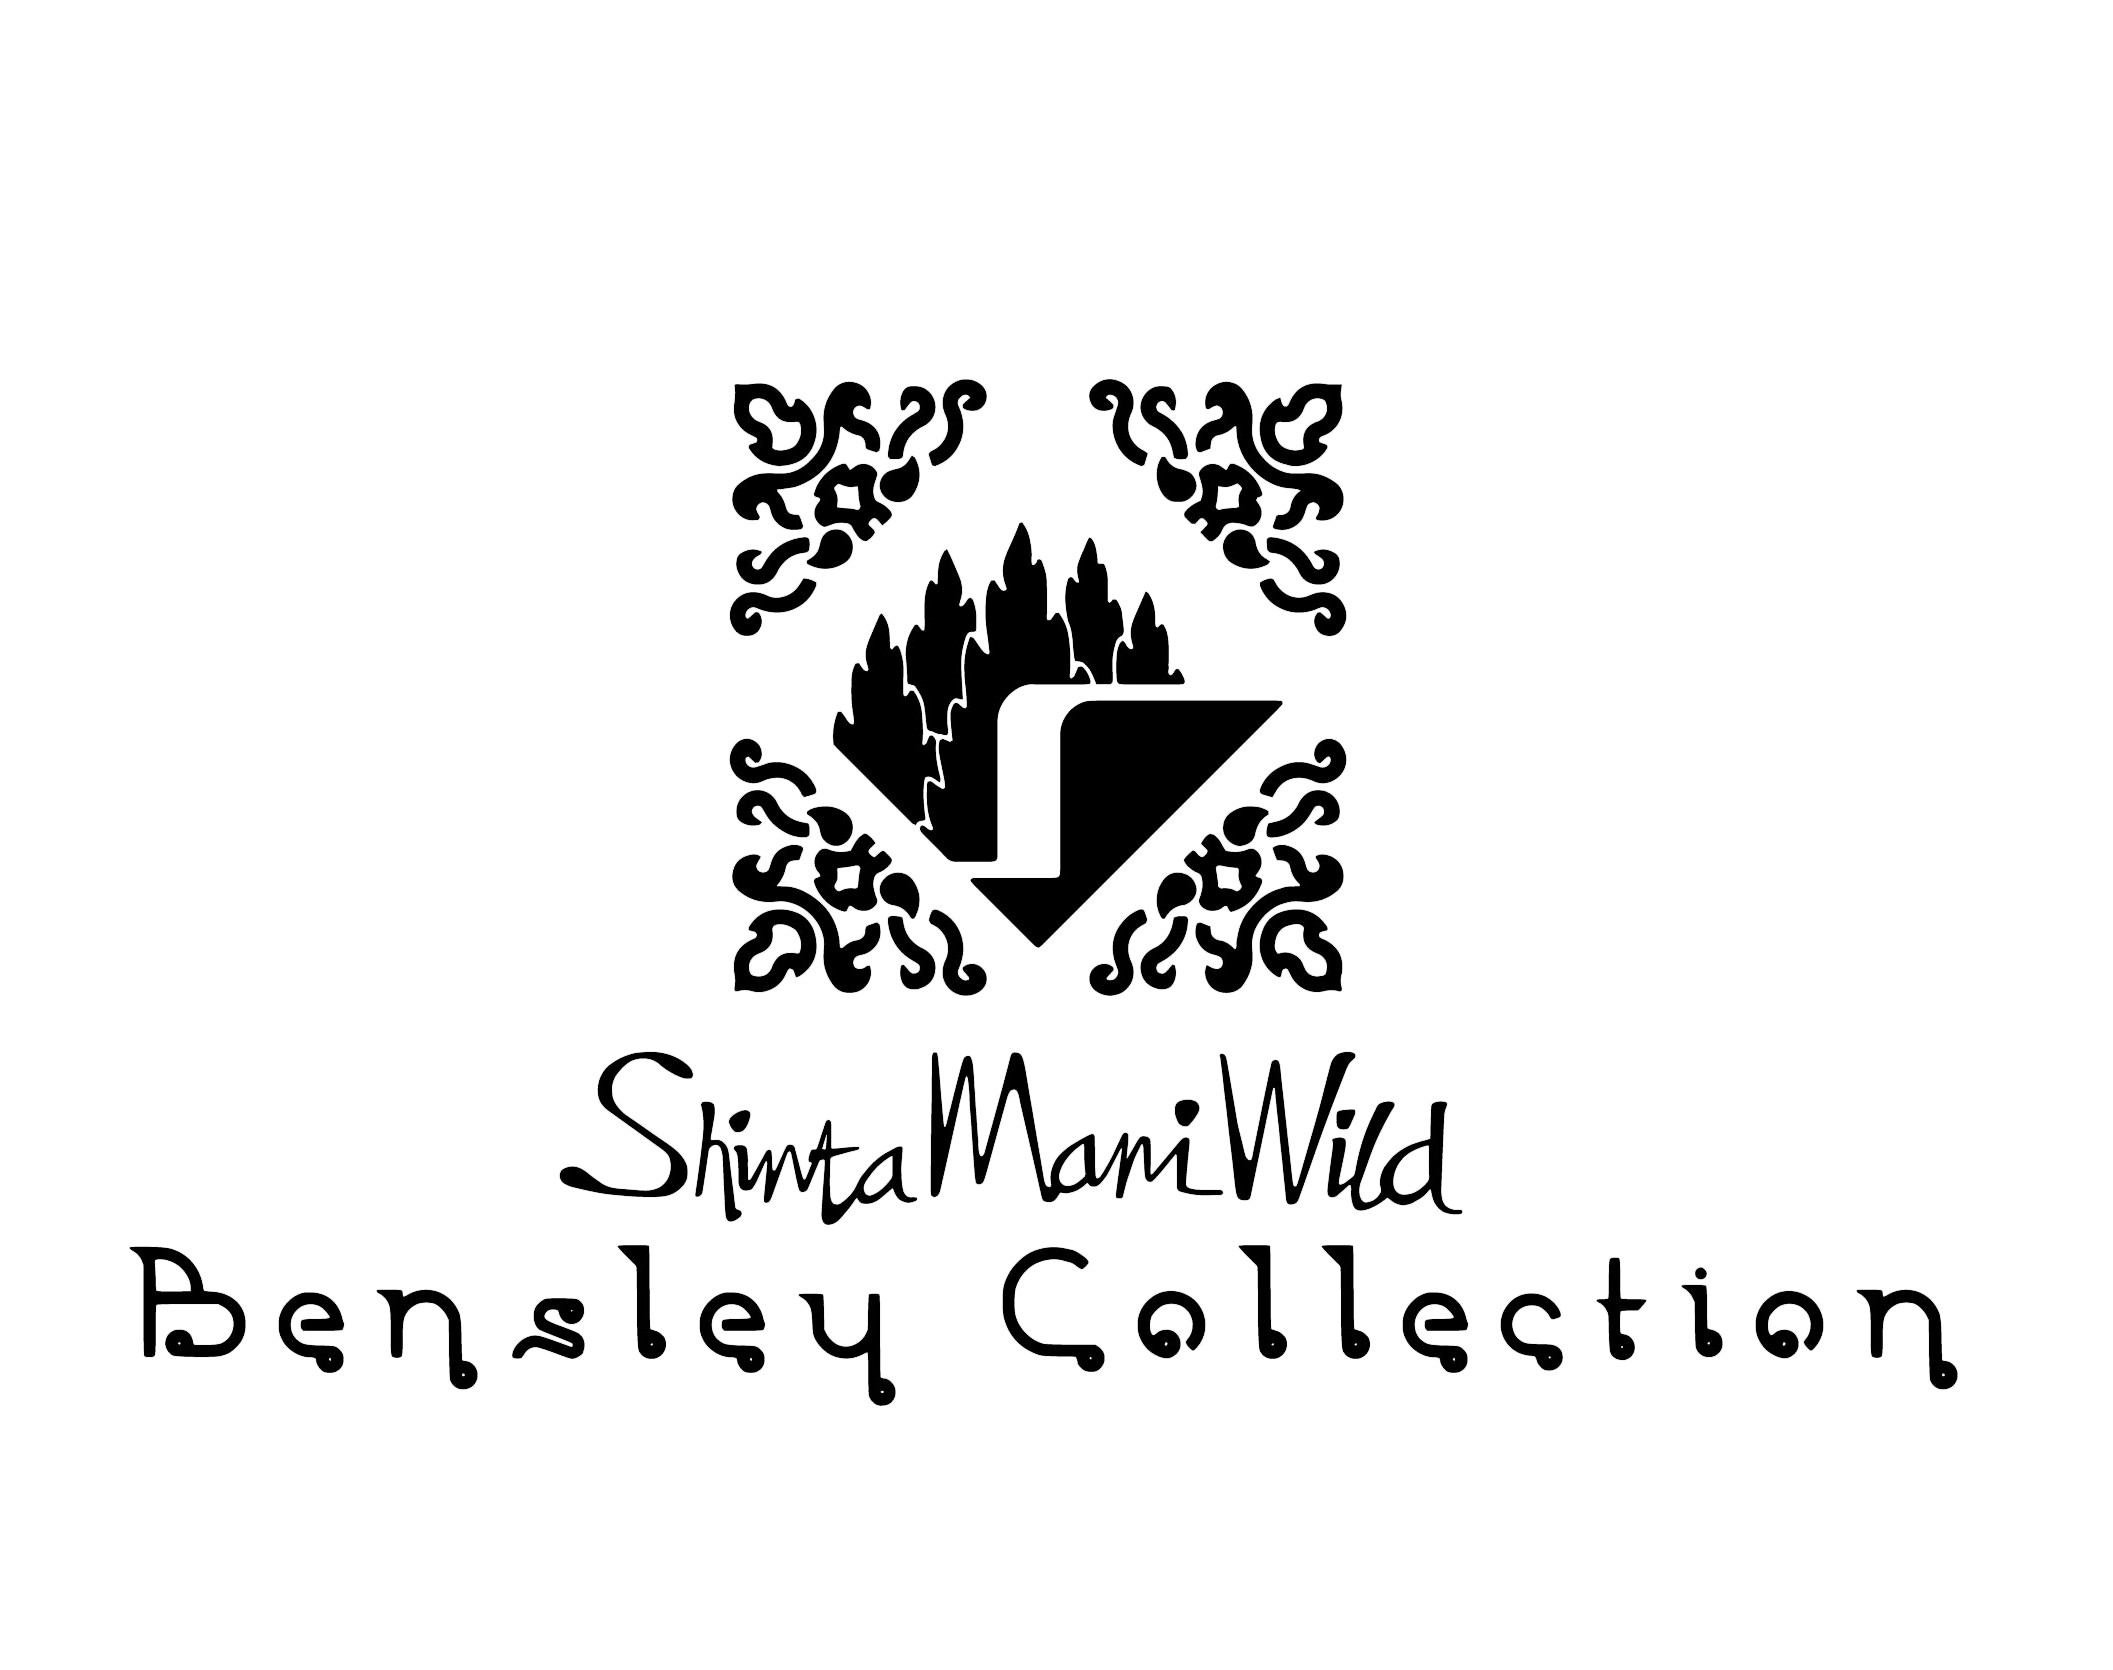 Bensley Collection - Shinta Mani Wild